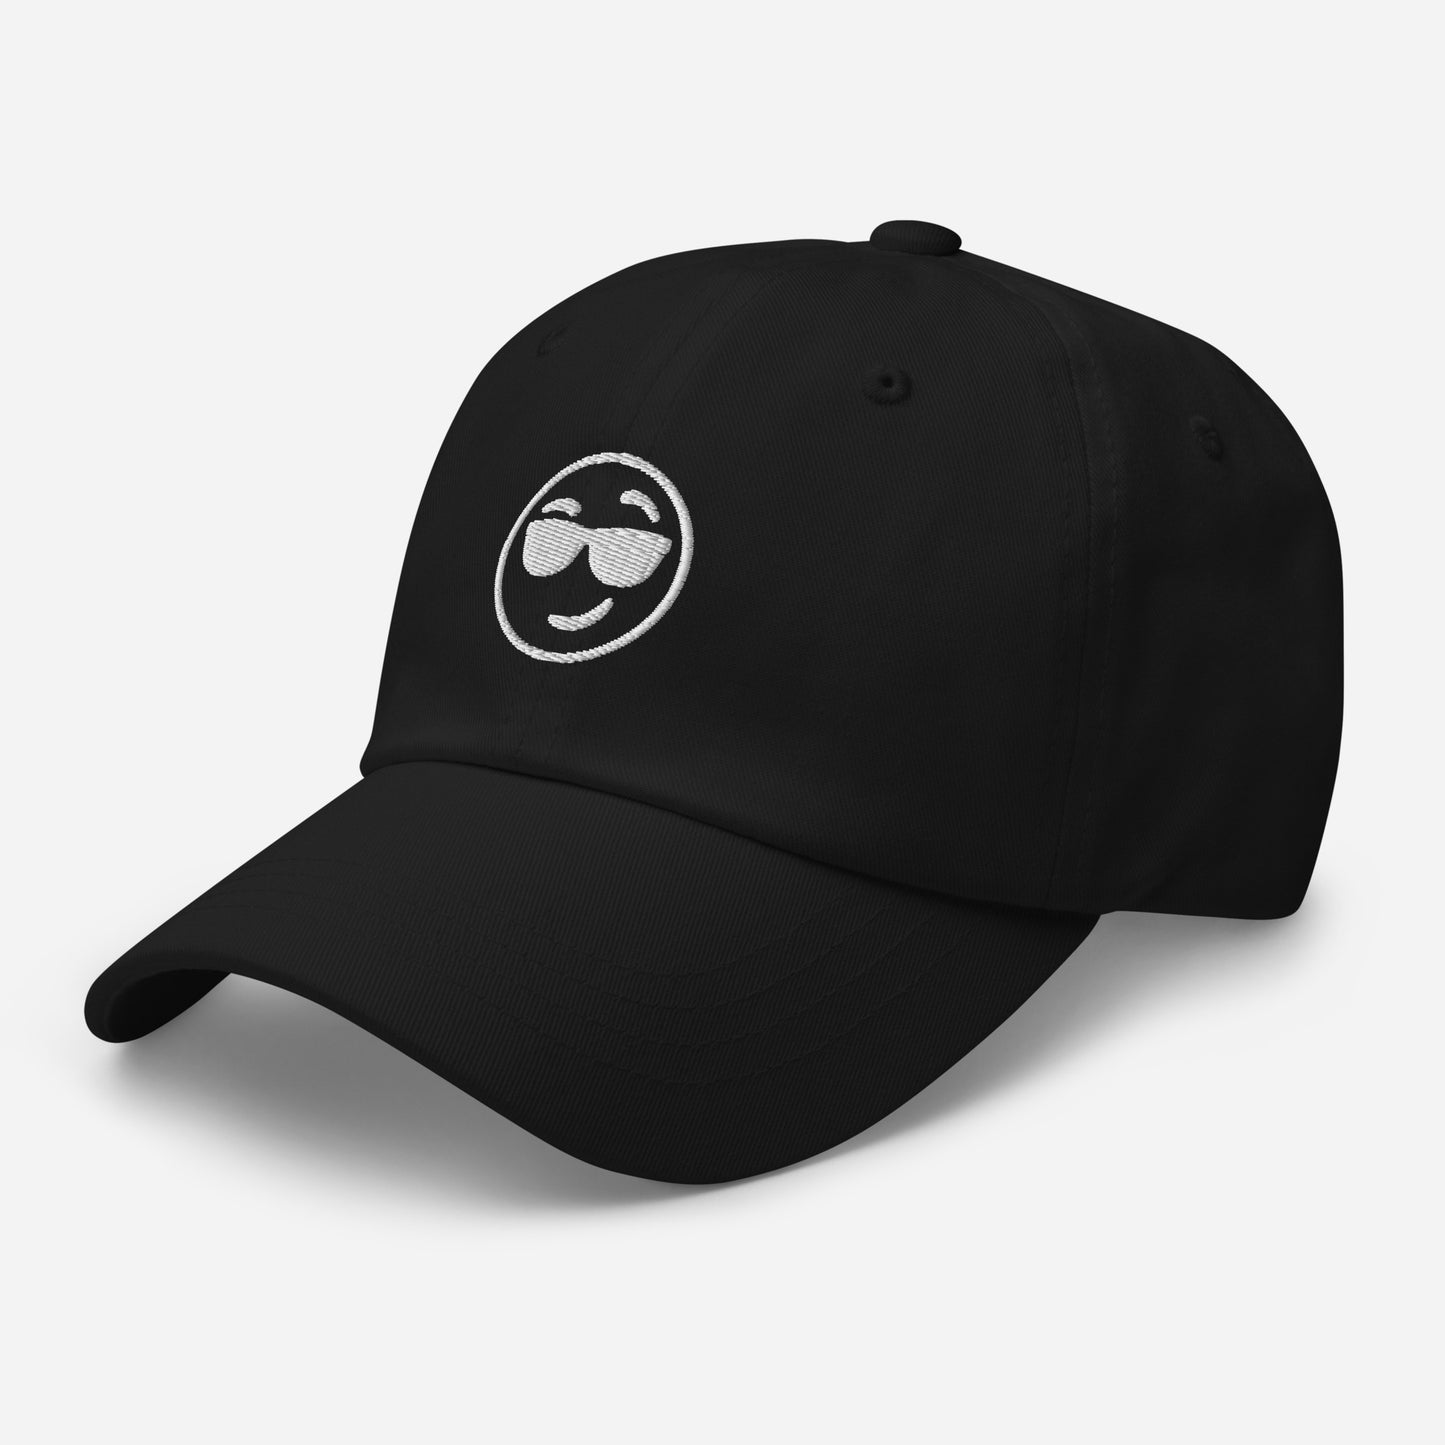 "Good Box 4 U" Hat